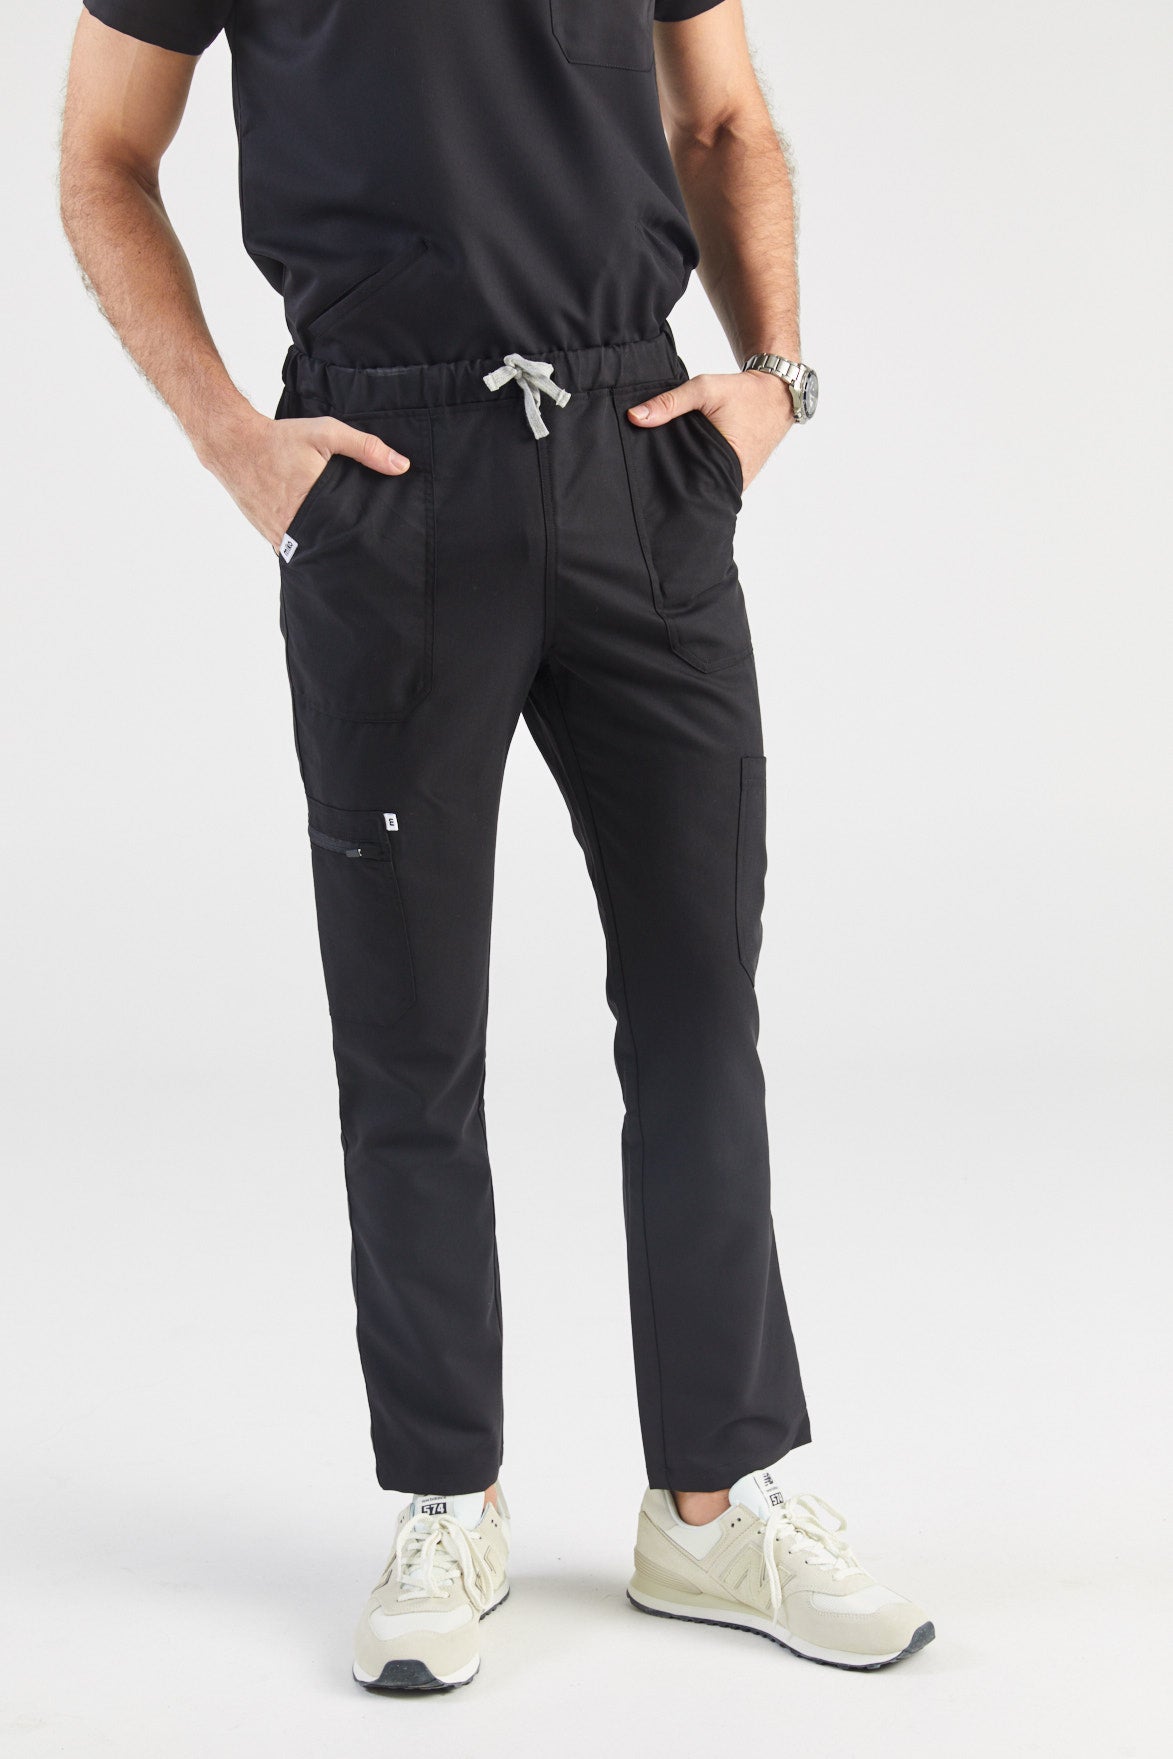 Men's Casper Multi-Pocket Scrubs Pants - Black